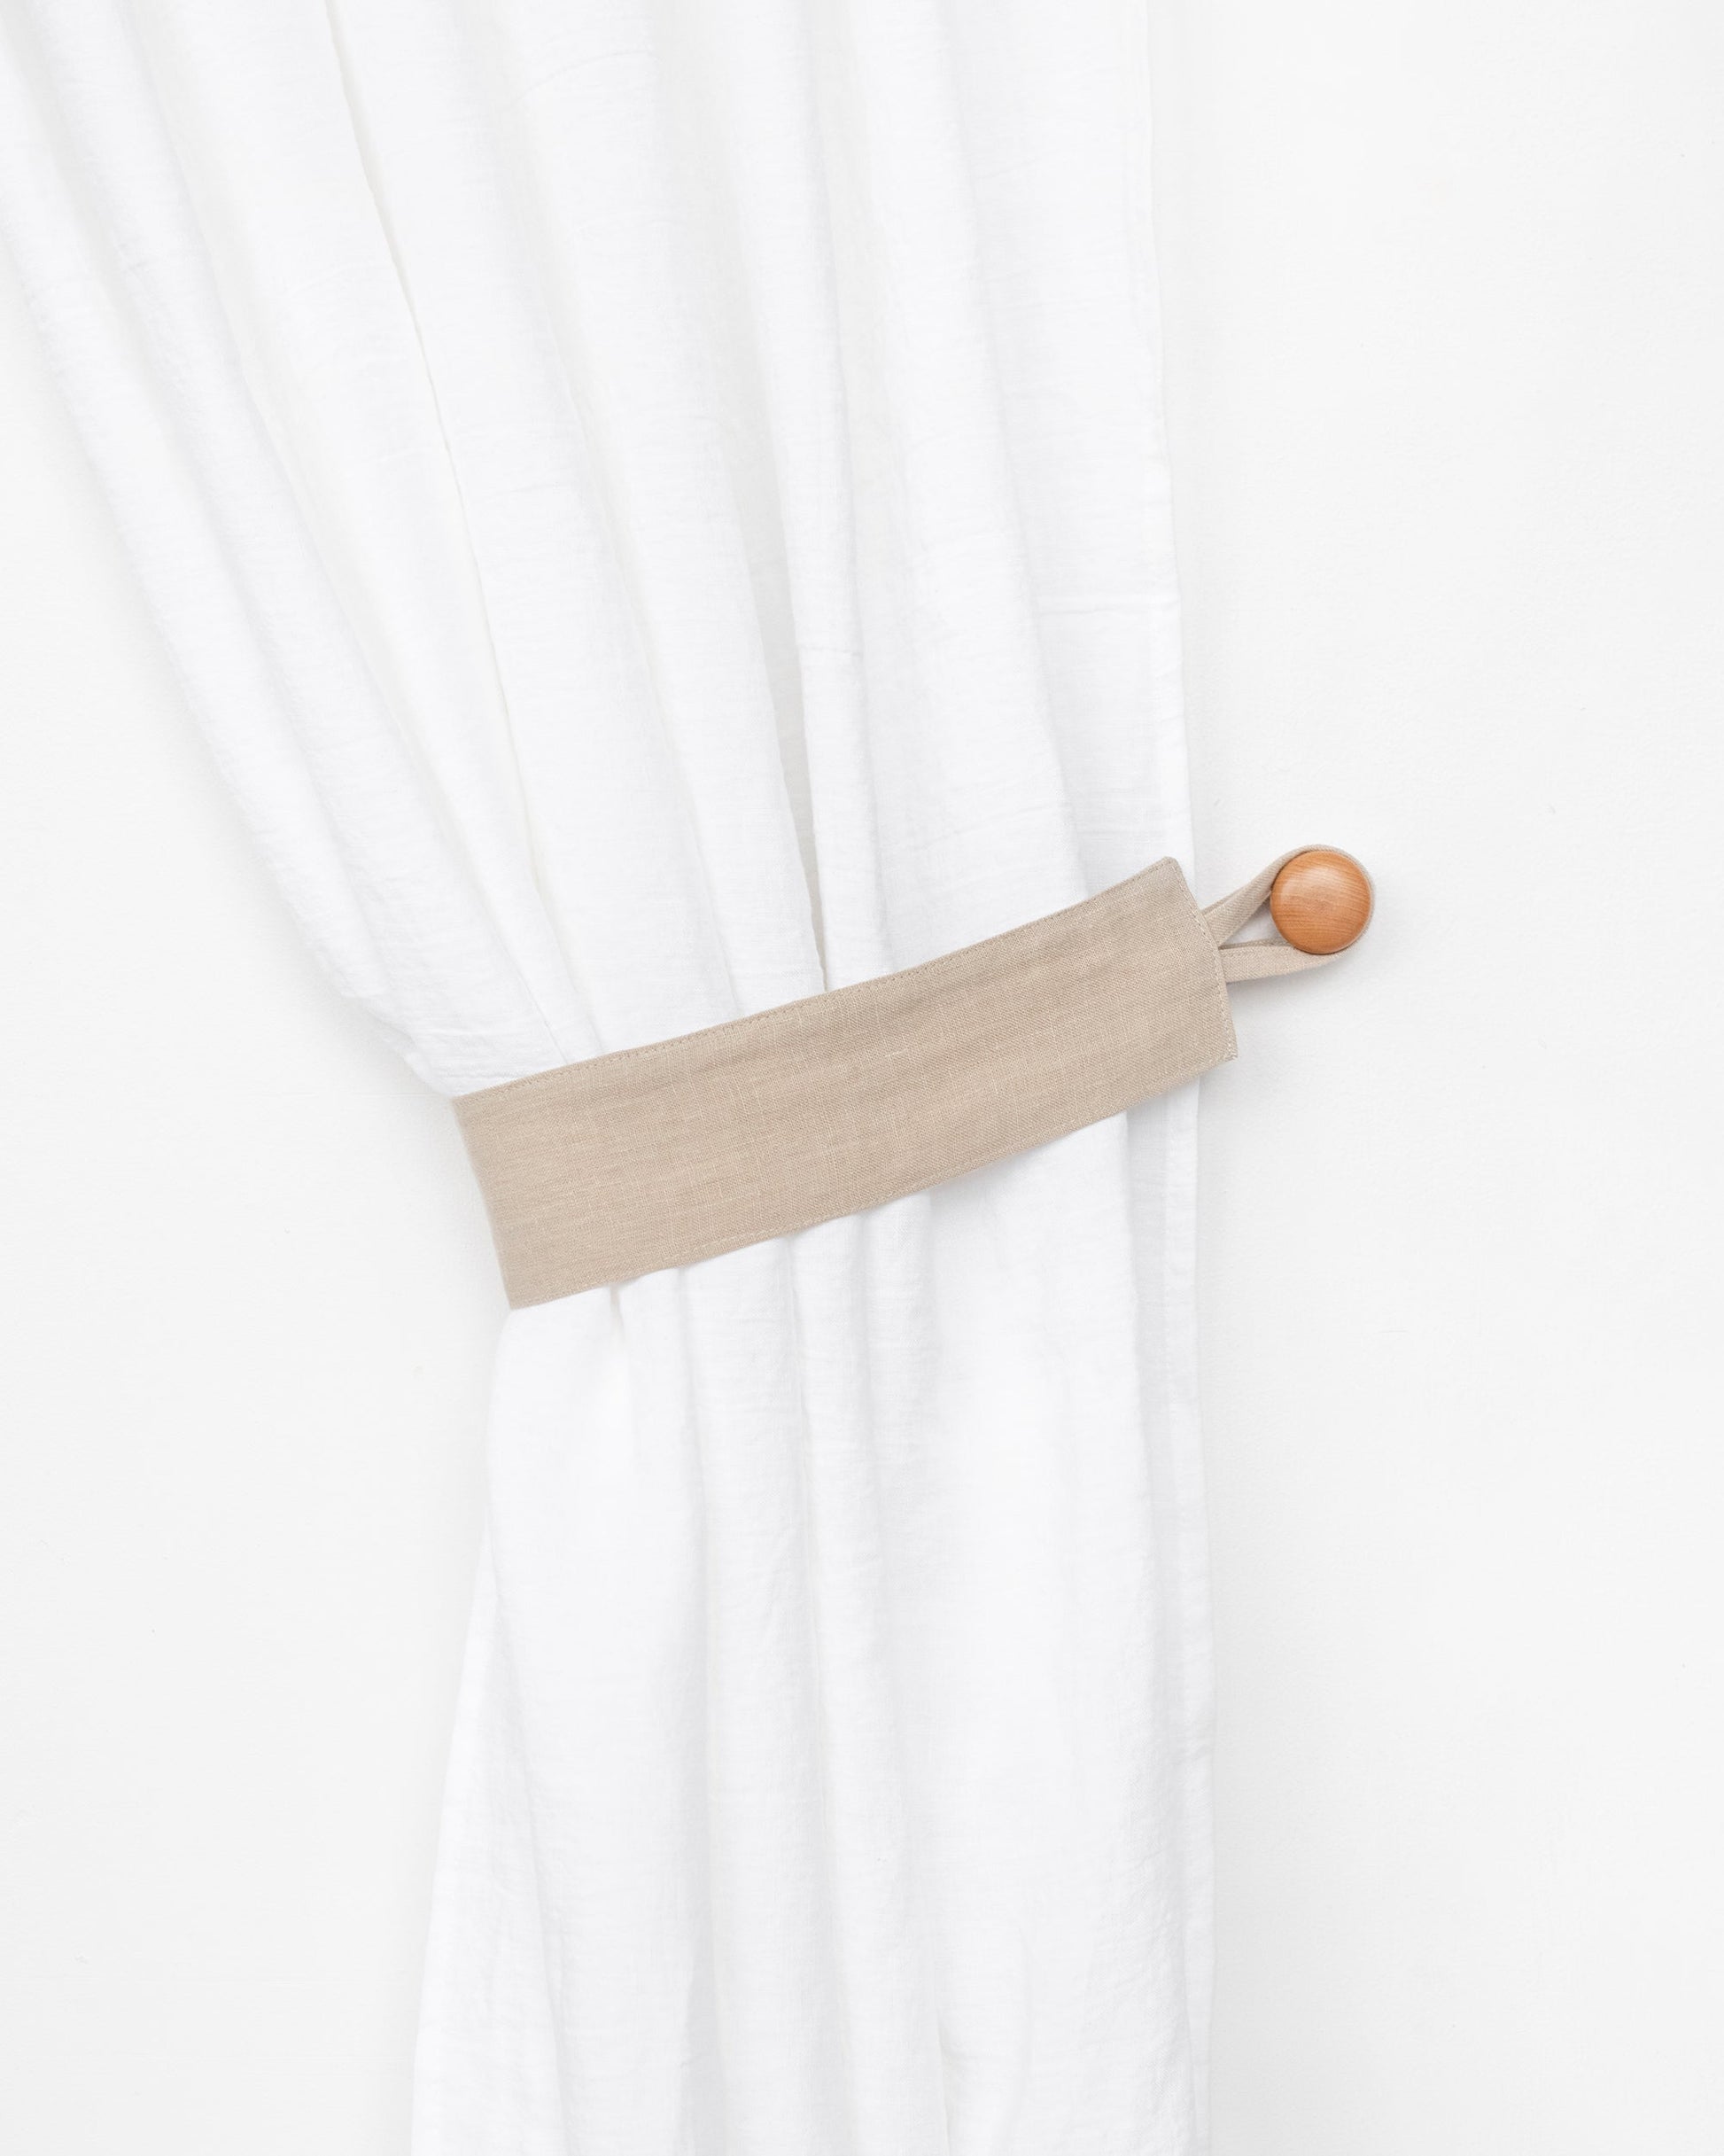 Linen curtain tie-back set of 2 in Natural linen - MagicLinen